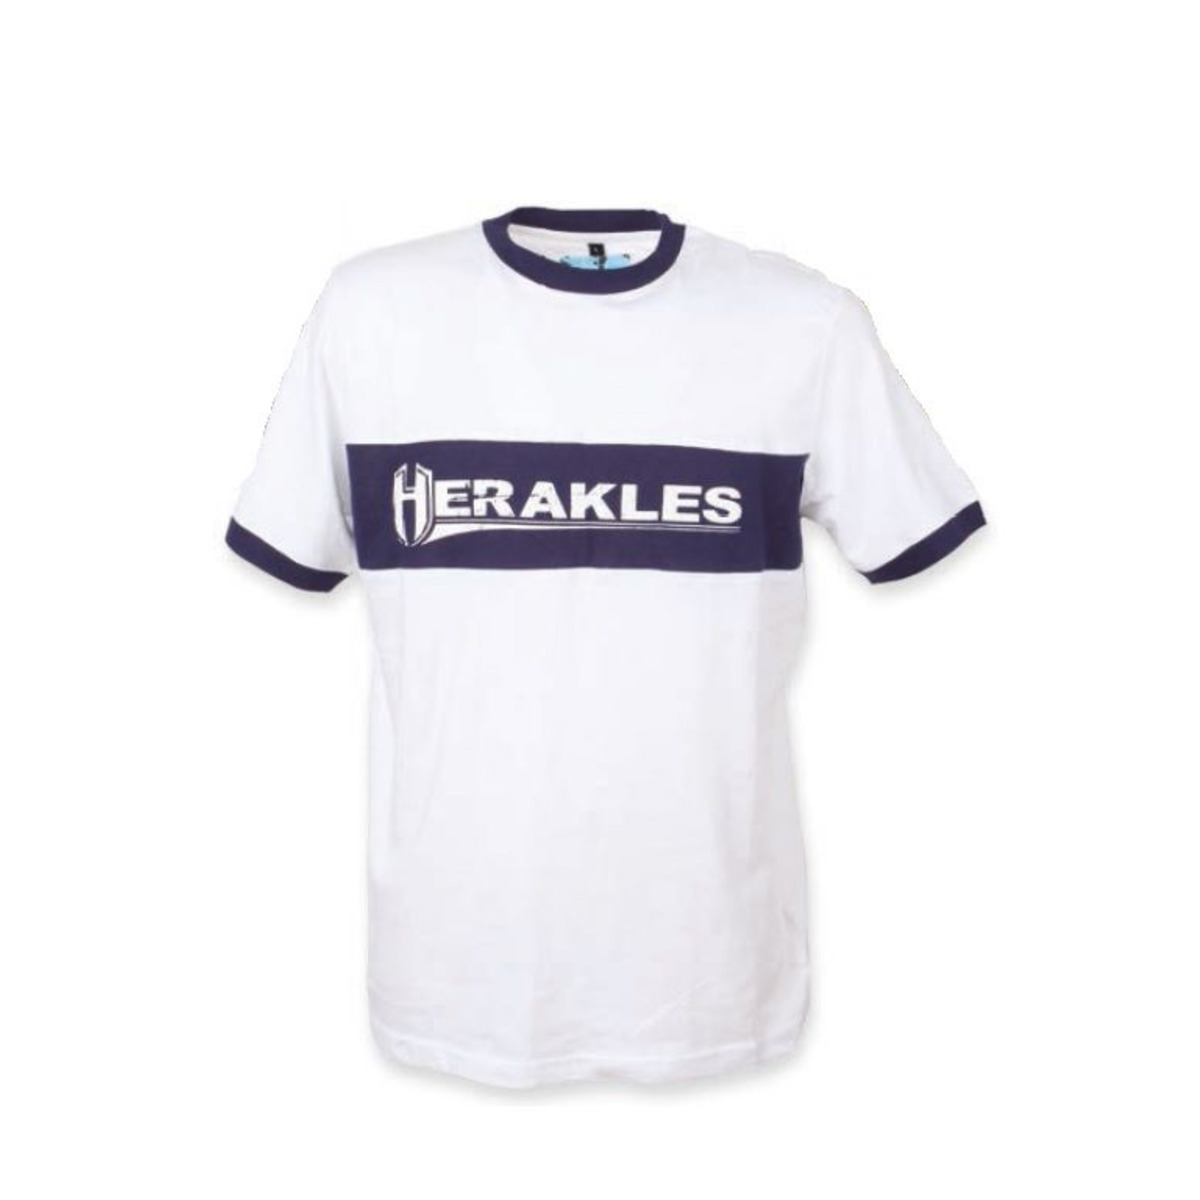 Herakles T-Shirt Blanc-Bleu - L